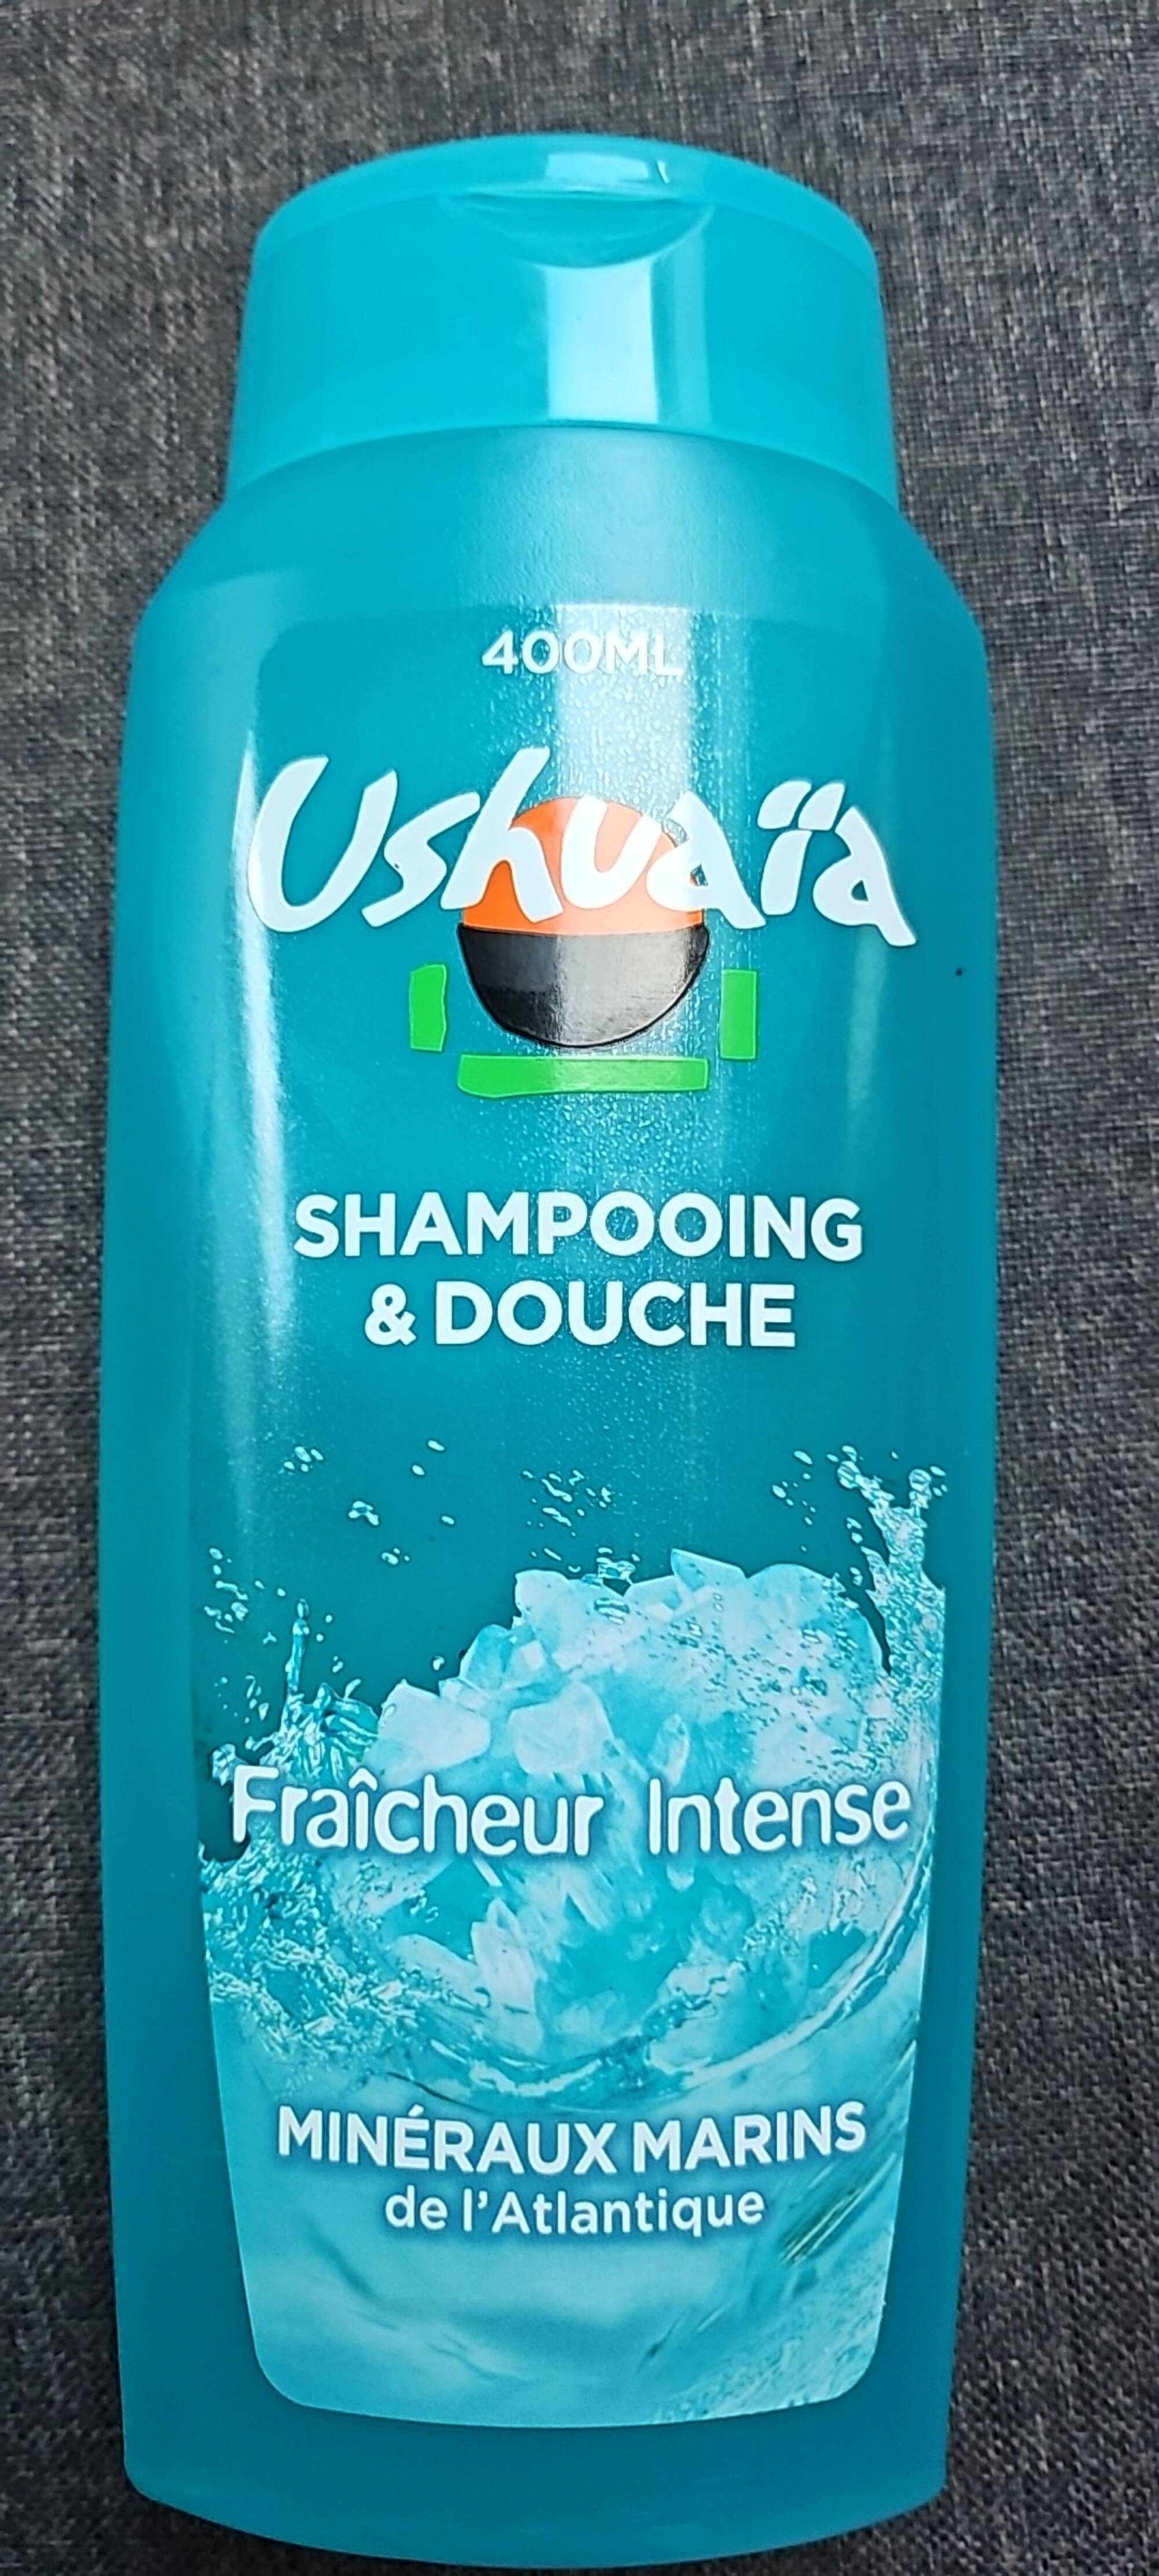 USHUAÏA - Shampooing & douche fraîcheur intense 